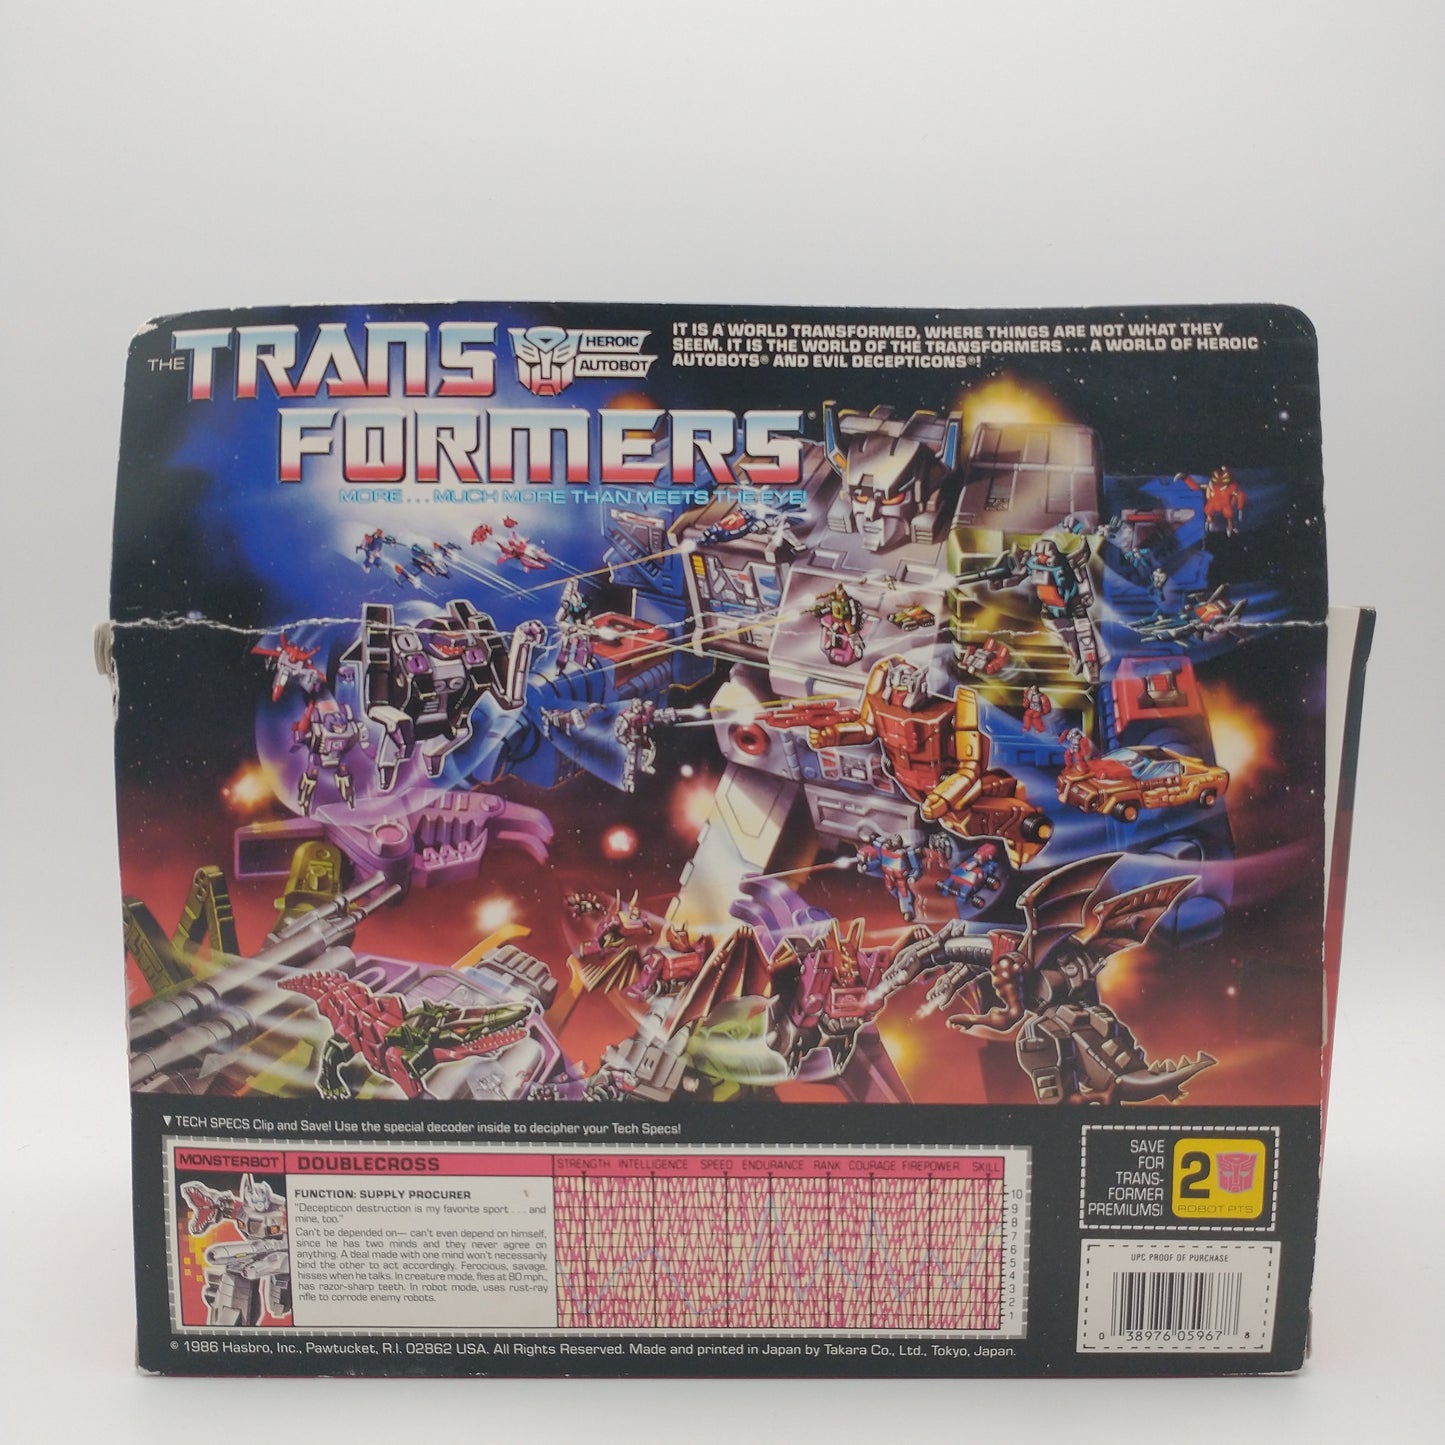 Transformers Monsterbot Doublecross Figure G1 Hasbro 1986